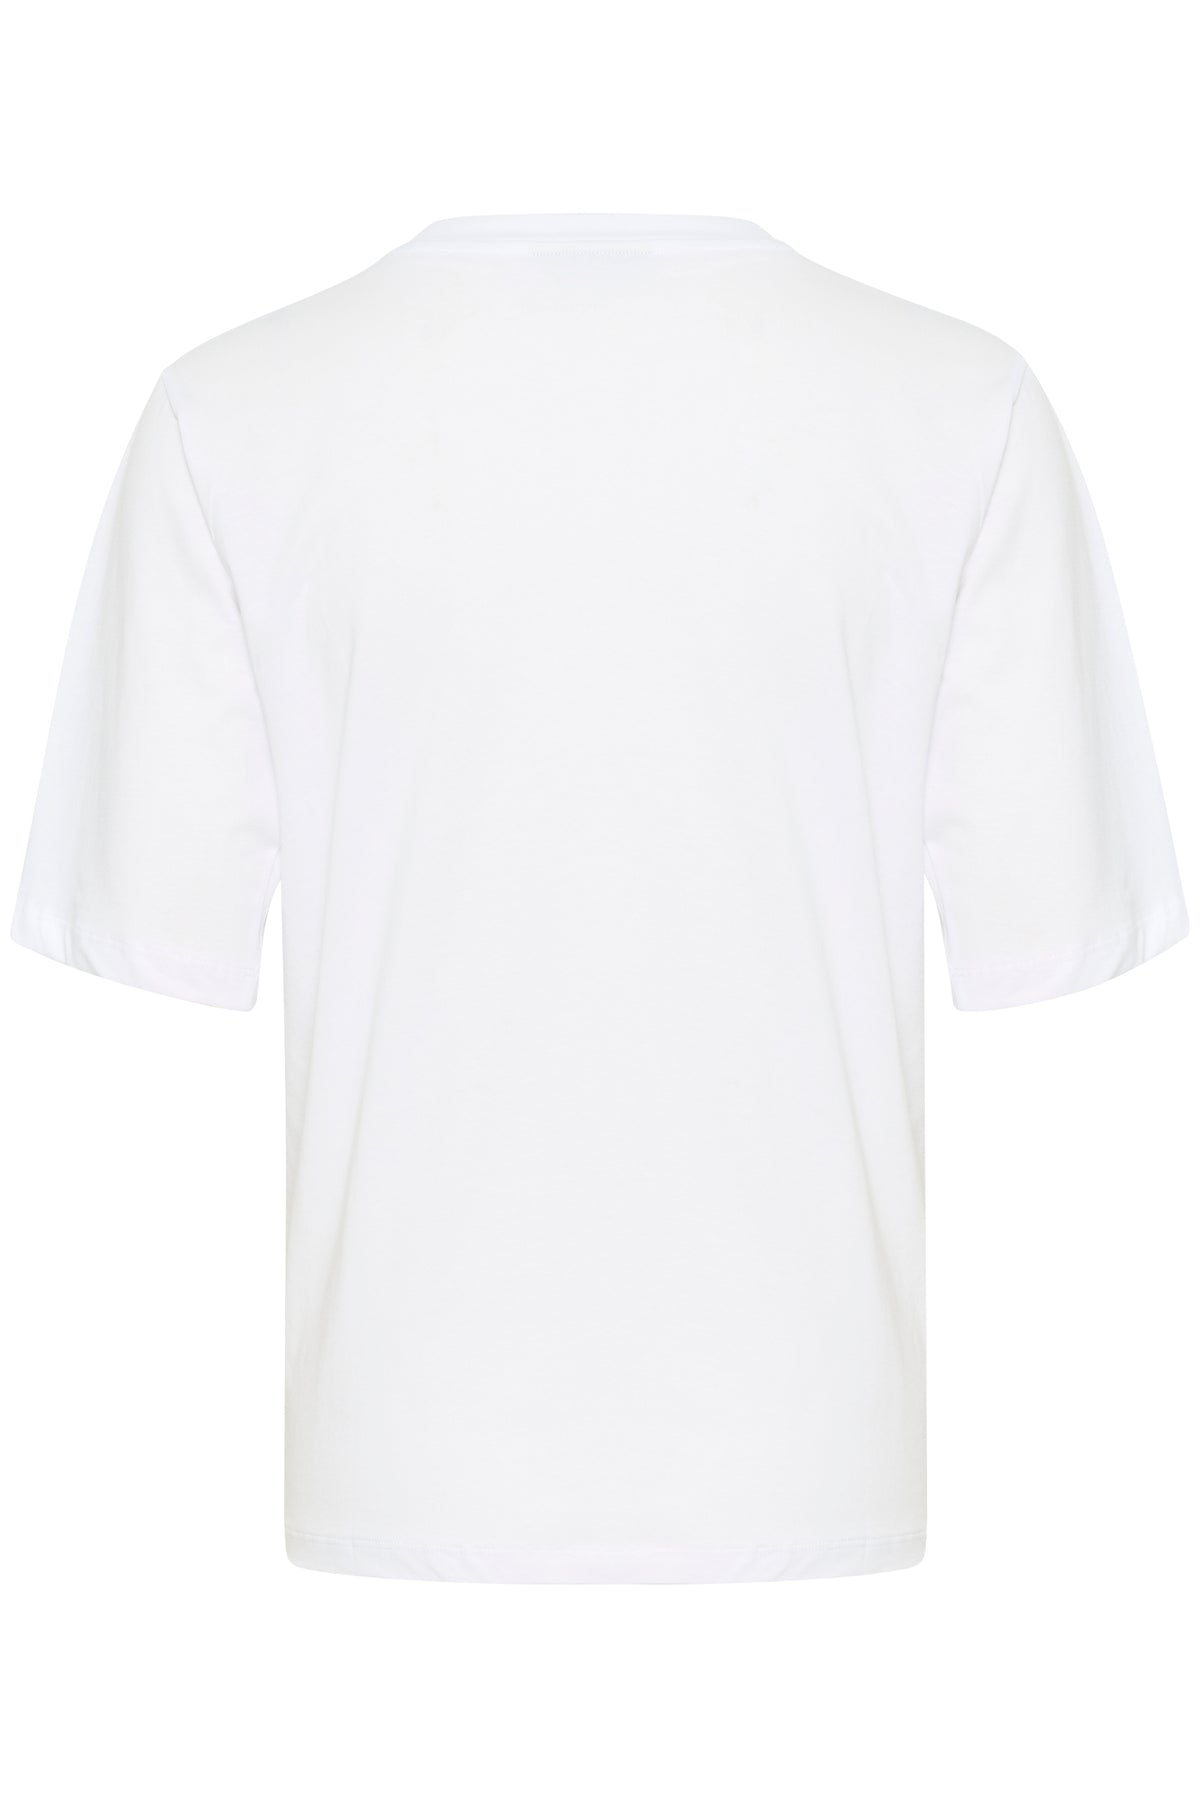 Kaffe Kamira Optical White 'Lemon Drop' Printed T-Shirt, 10508592